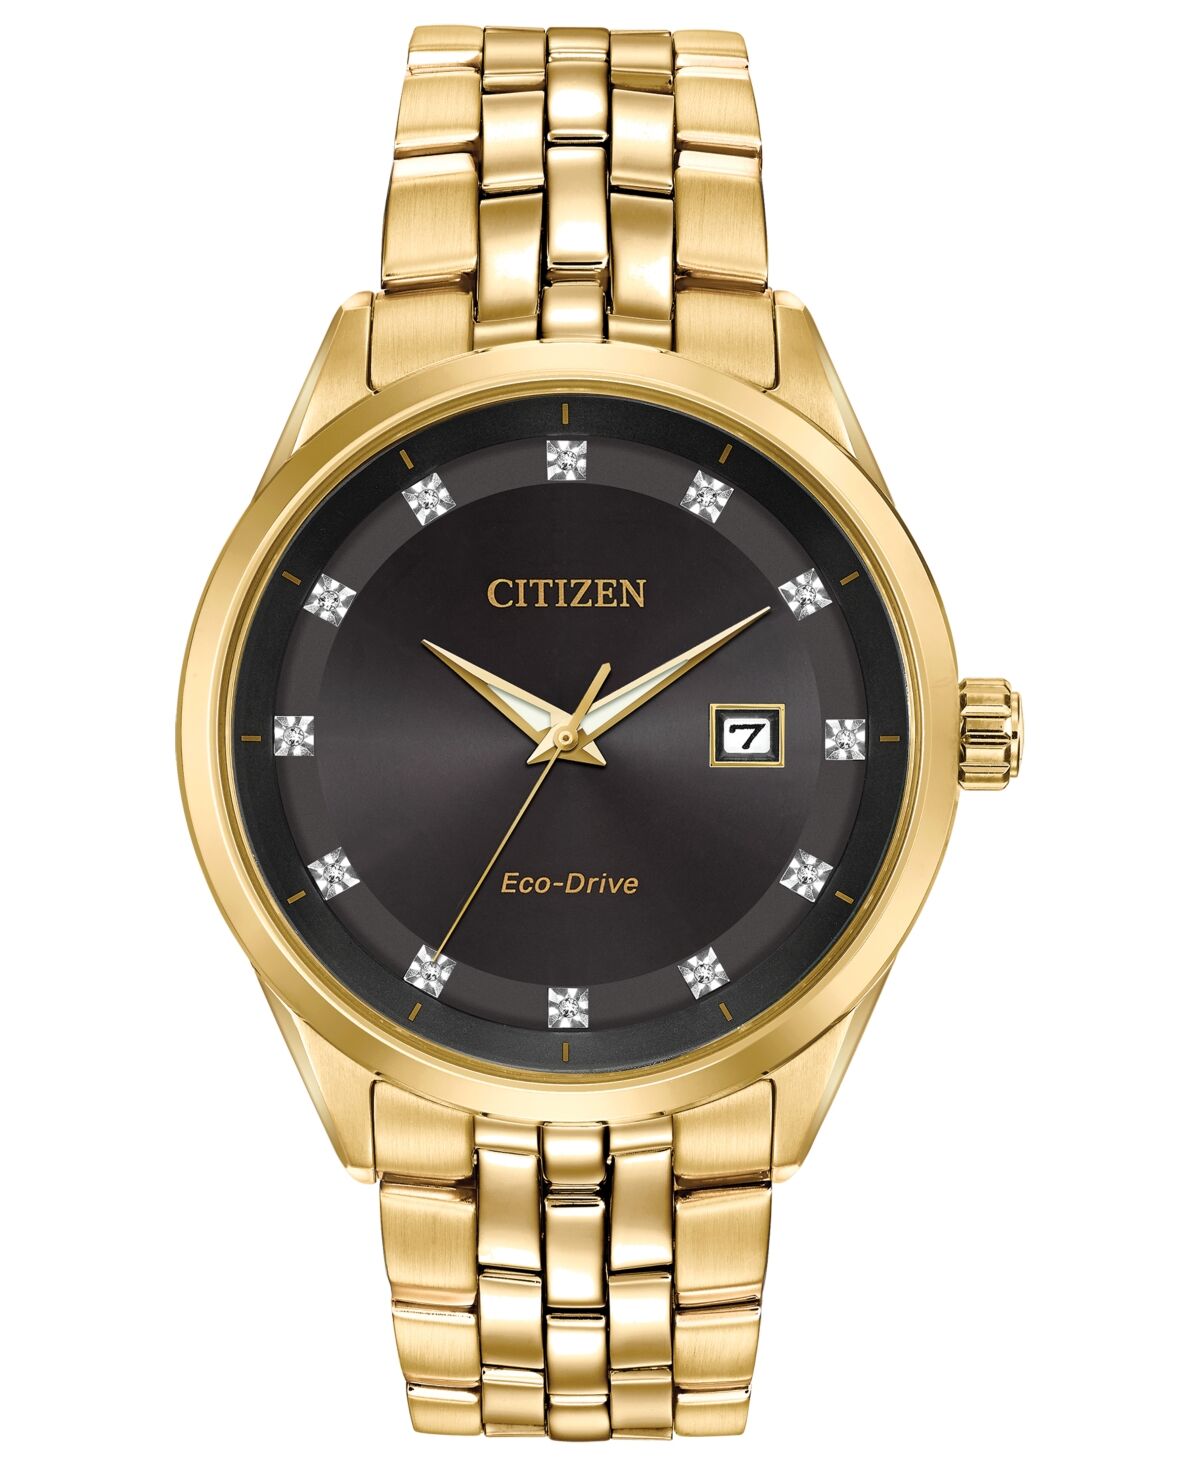 Citizen Men's Eco-Drive Corso Diamond-Accent Gold-Tone Stainless Steel Bracelet Watch 41mm - Gold